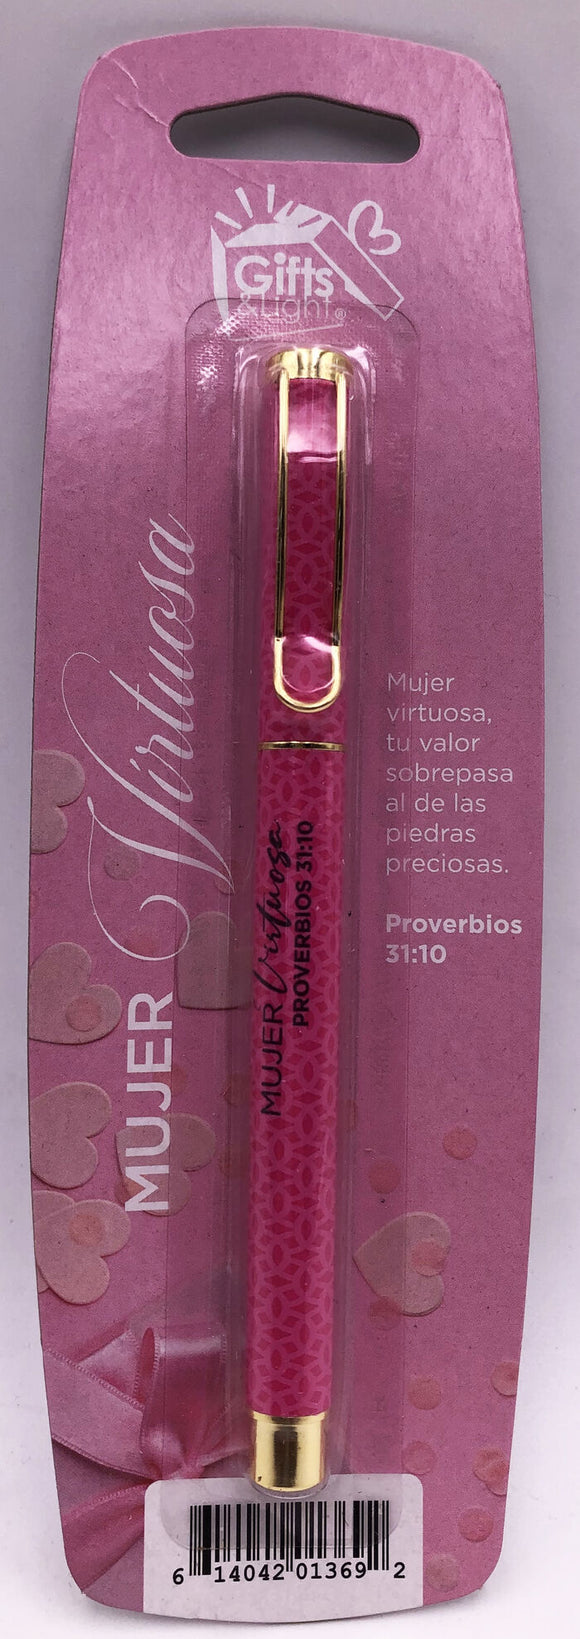 Bolígrafo Mujer virtuosa